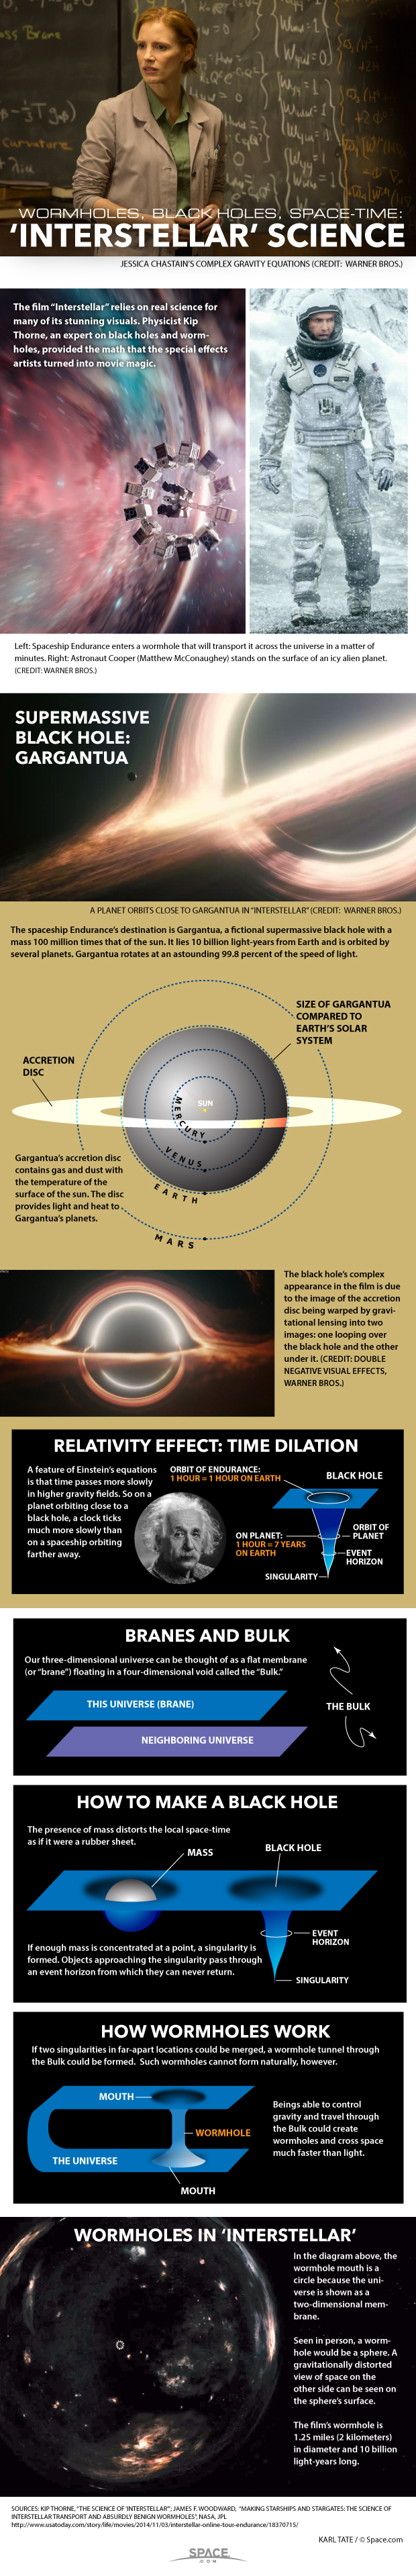 interstellar time travel theory